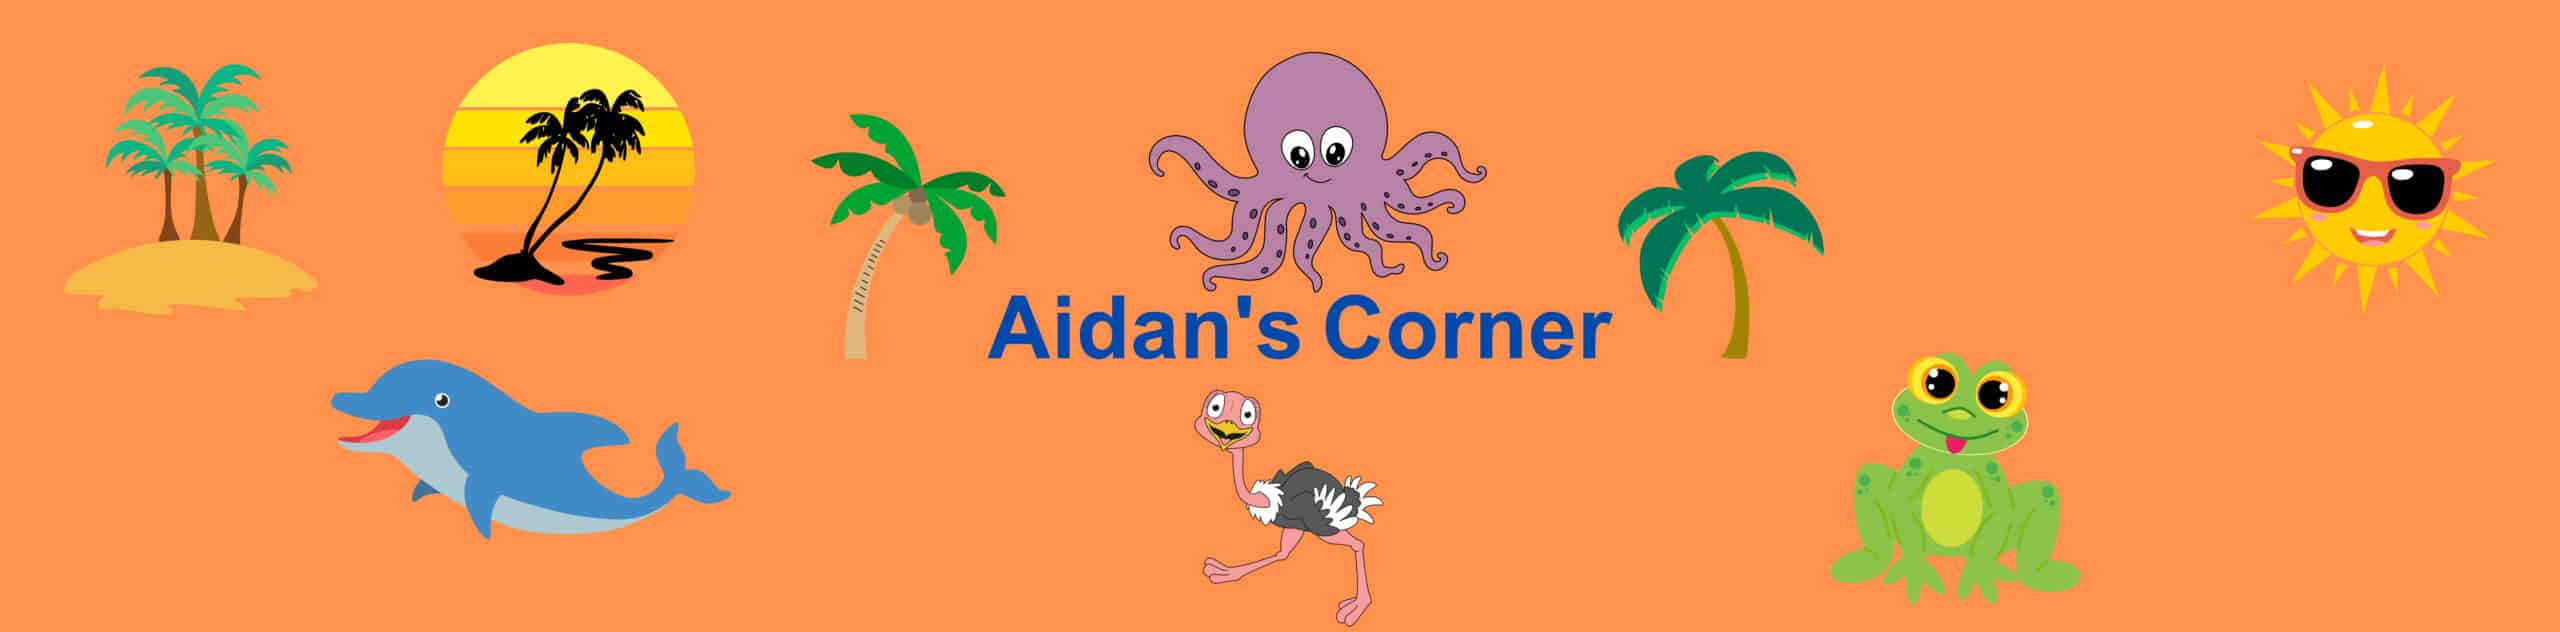 Aidan's Corner banner